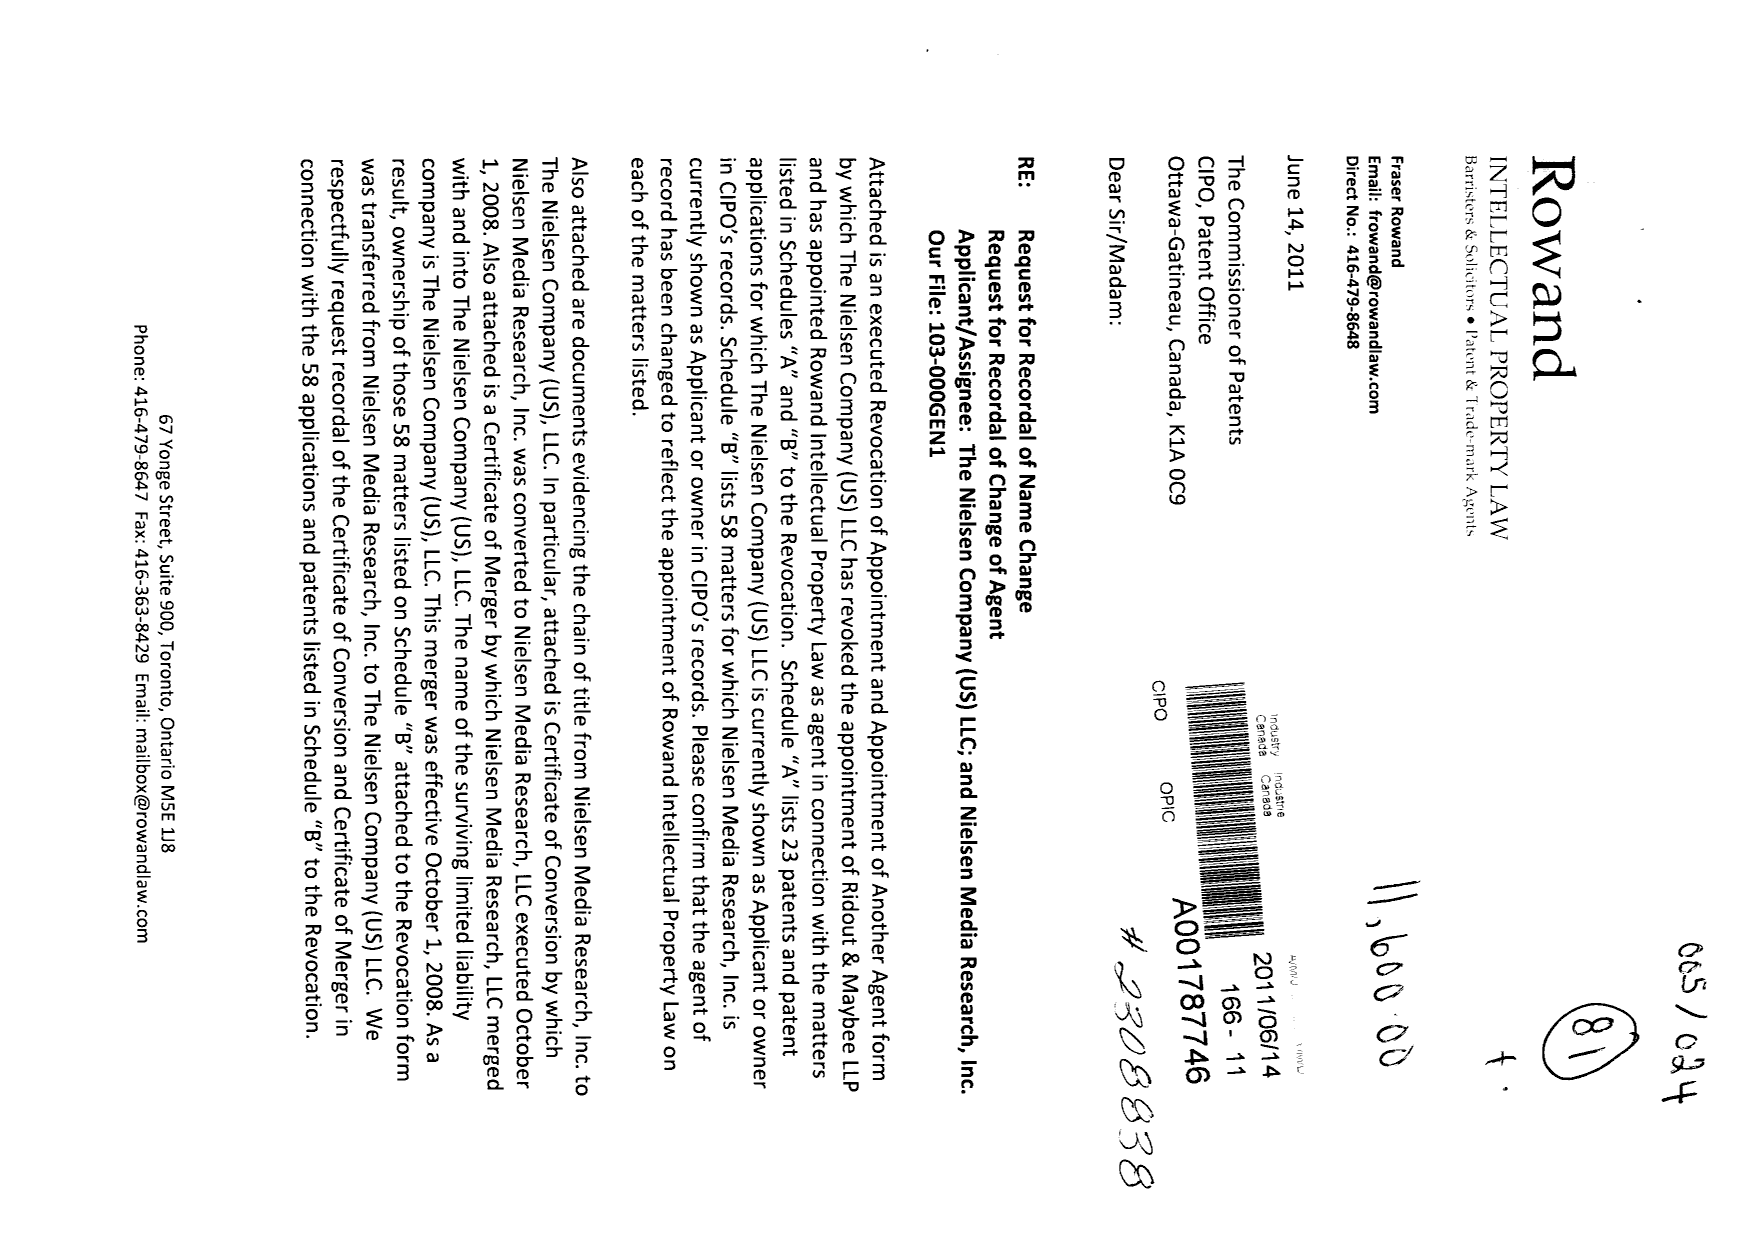 Canadian Patent Document 2666199. Correspondence 20110614. Image 1 of 12